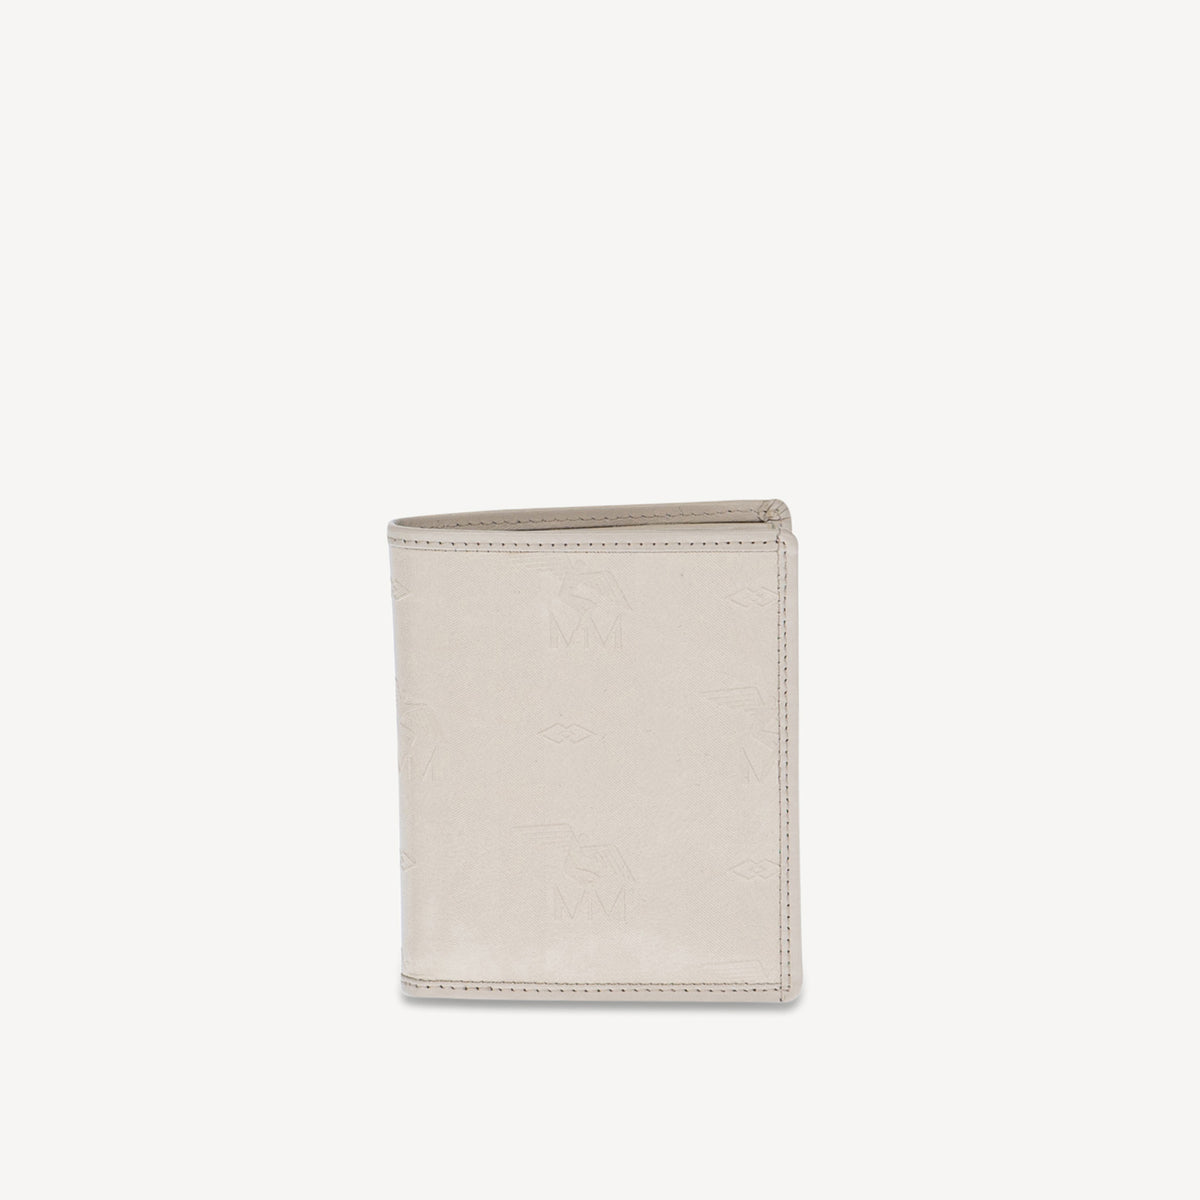 BEVERIN | Wallet pearl white/silver